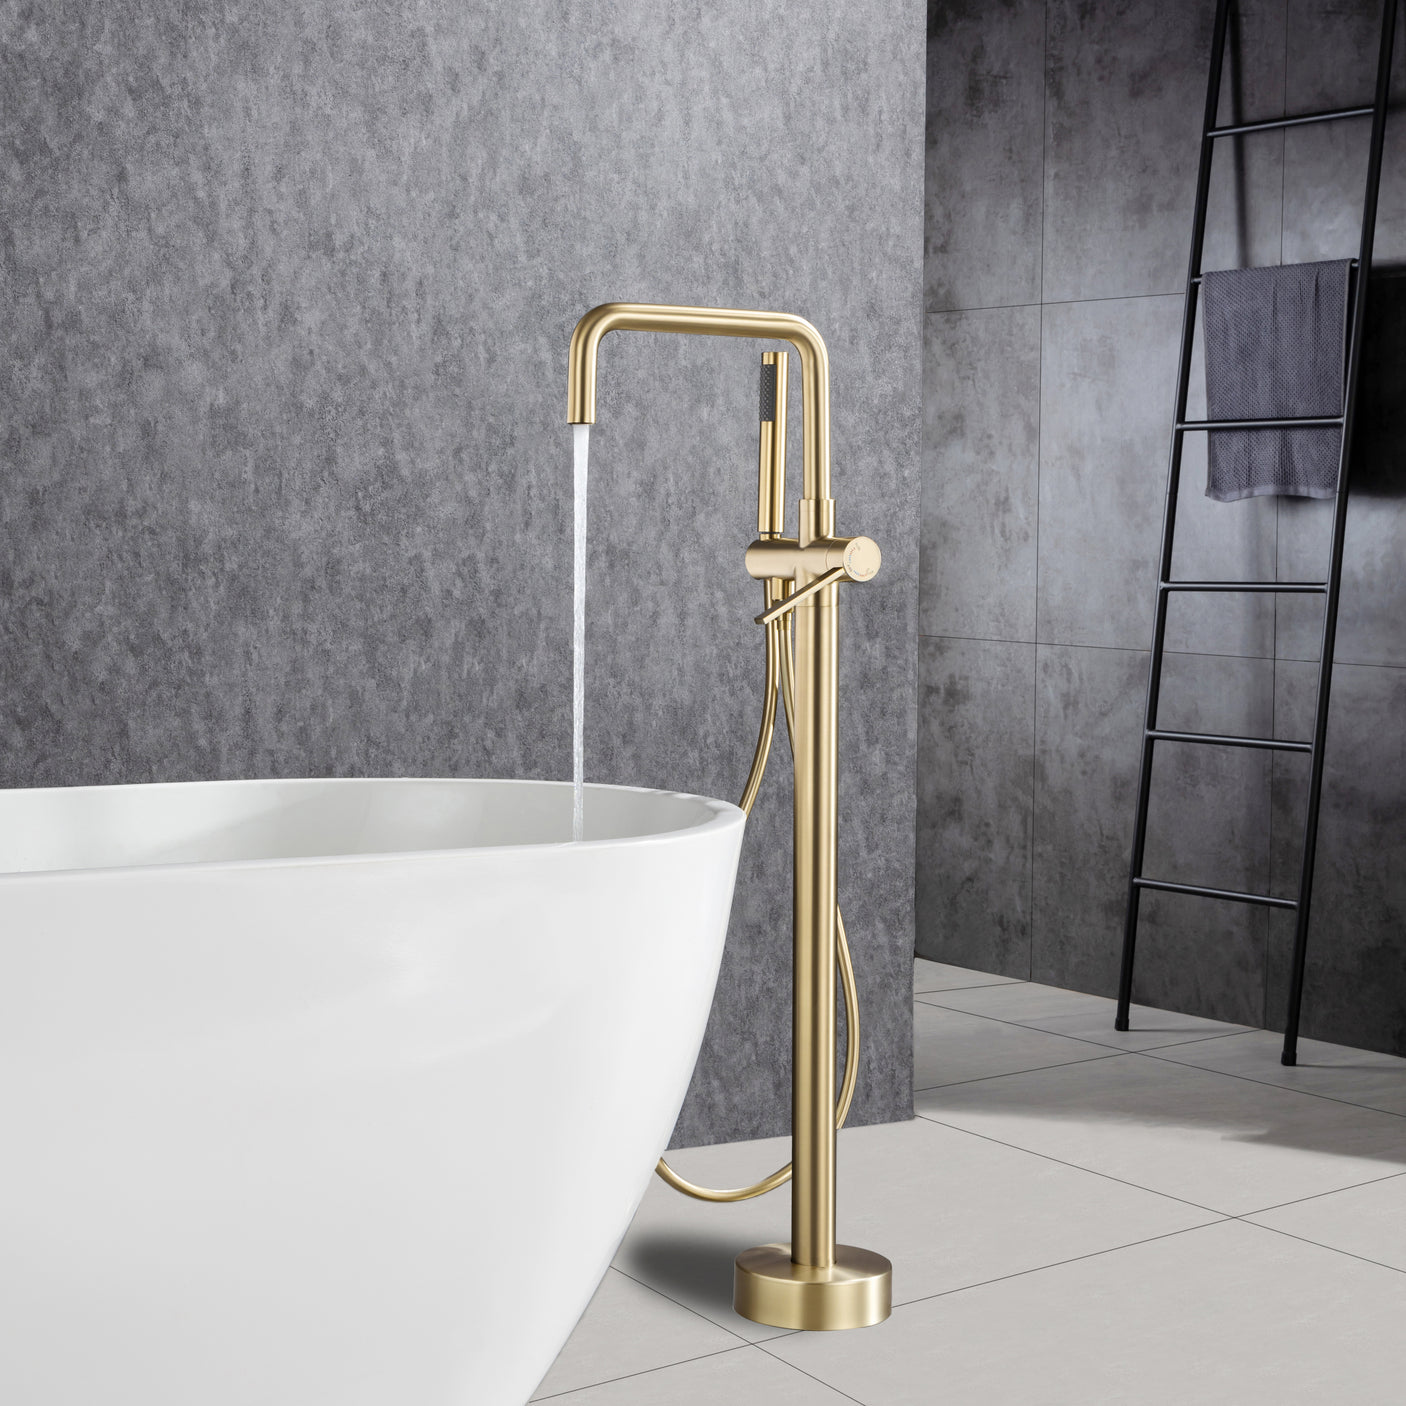 Freestanding Tub Filler Matte Black Bathtub Faucet Floor Mount Single Handle Brass Tub Faucets with Handheld Shower Swivel Spout